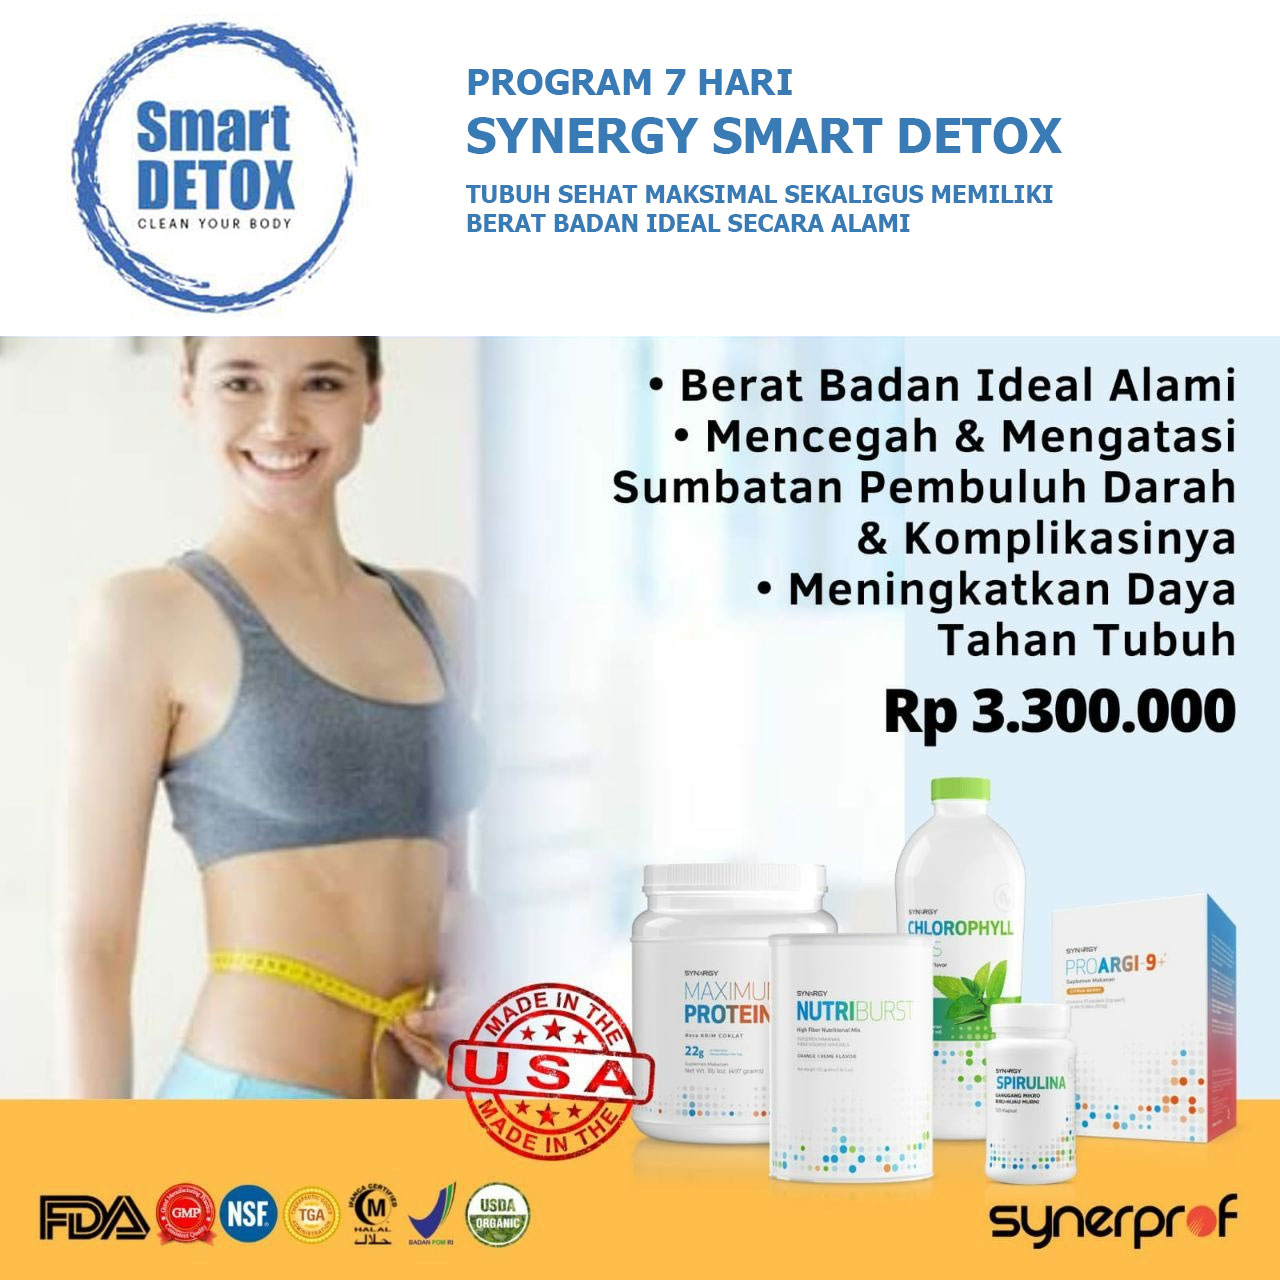 Smart Detox Program 7 Hari